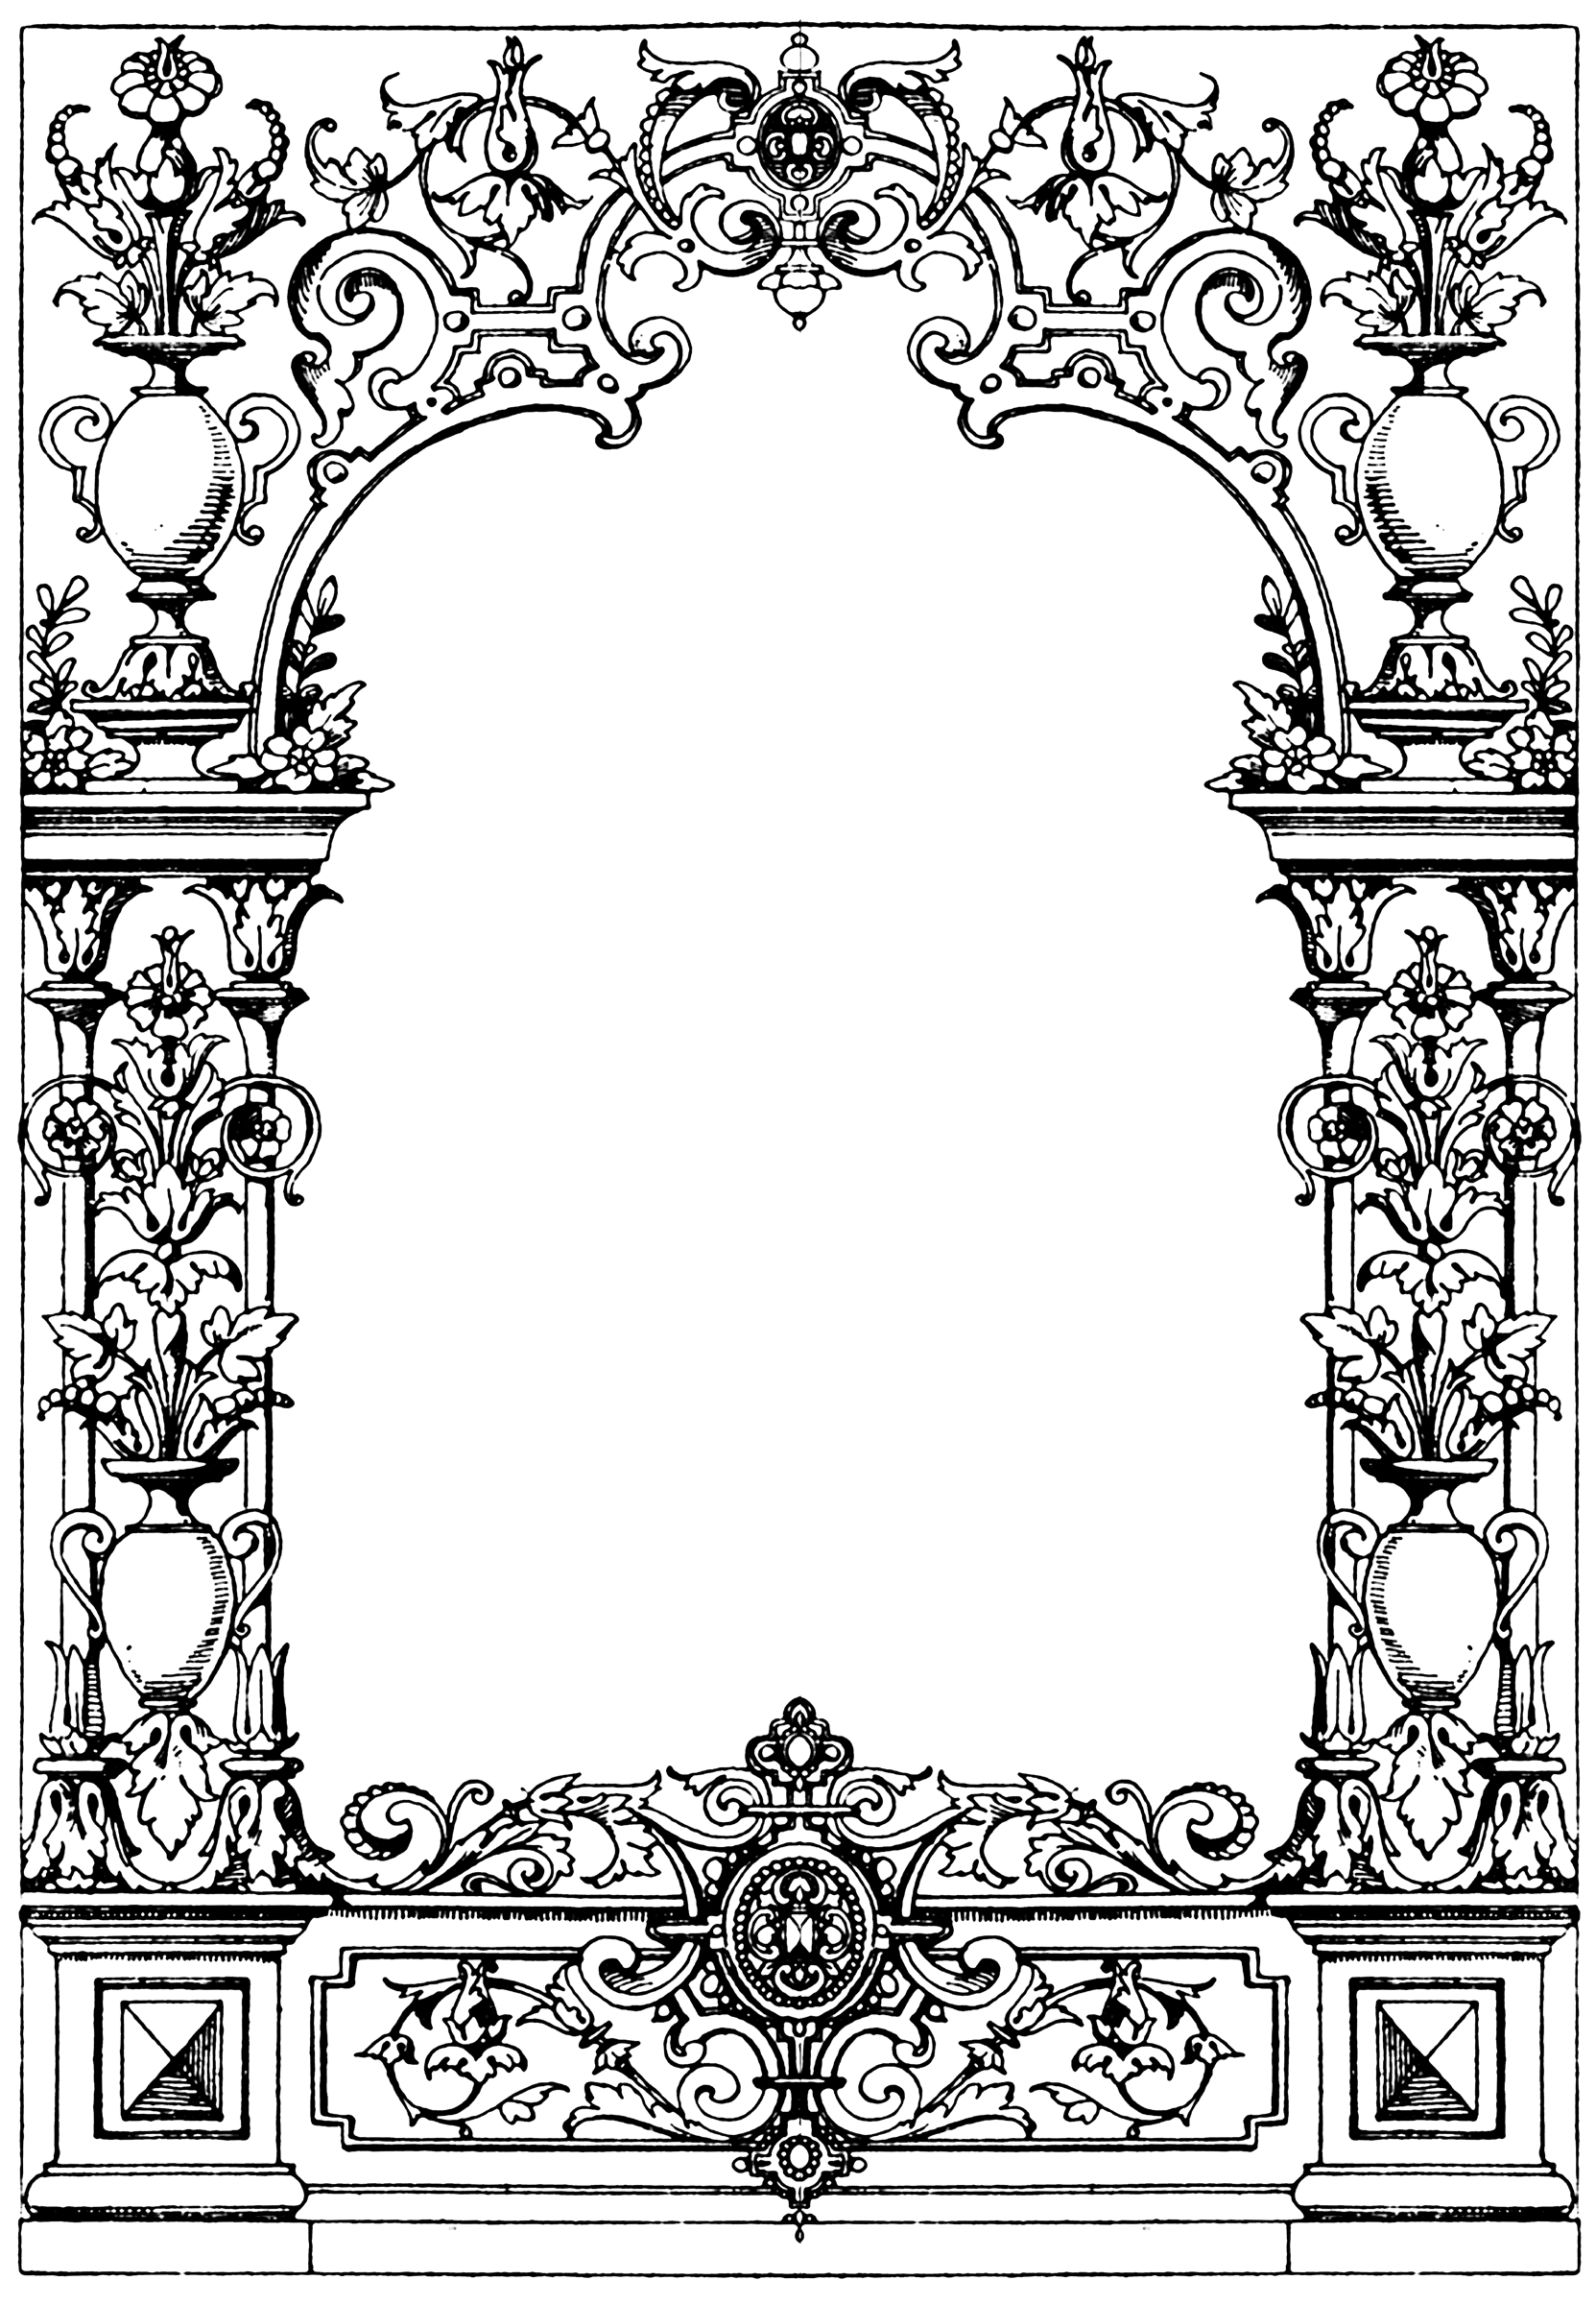 Border Typographical Frame   ClipArt ETC